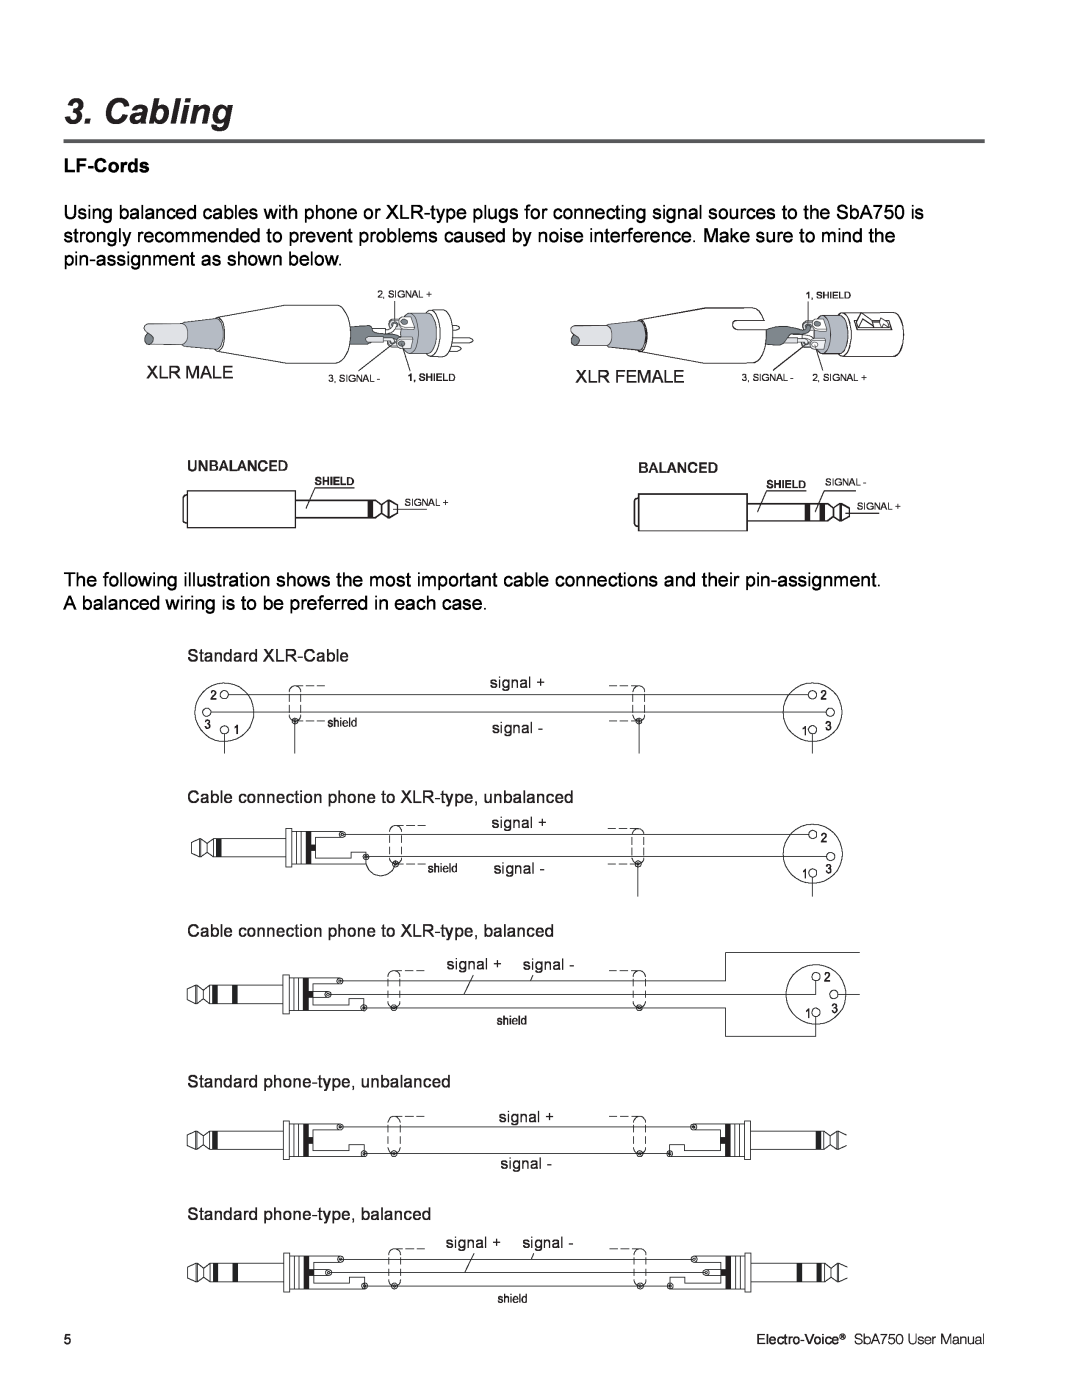 Electro-Voice SBA750 user manual Cabling, LF-Cords 